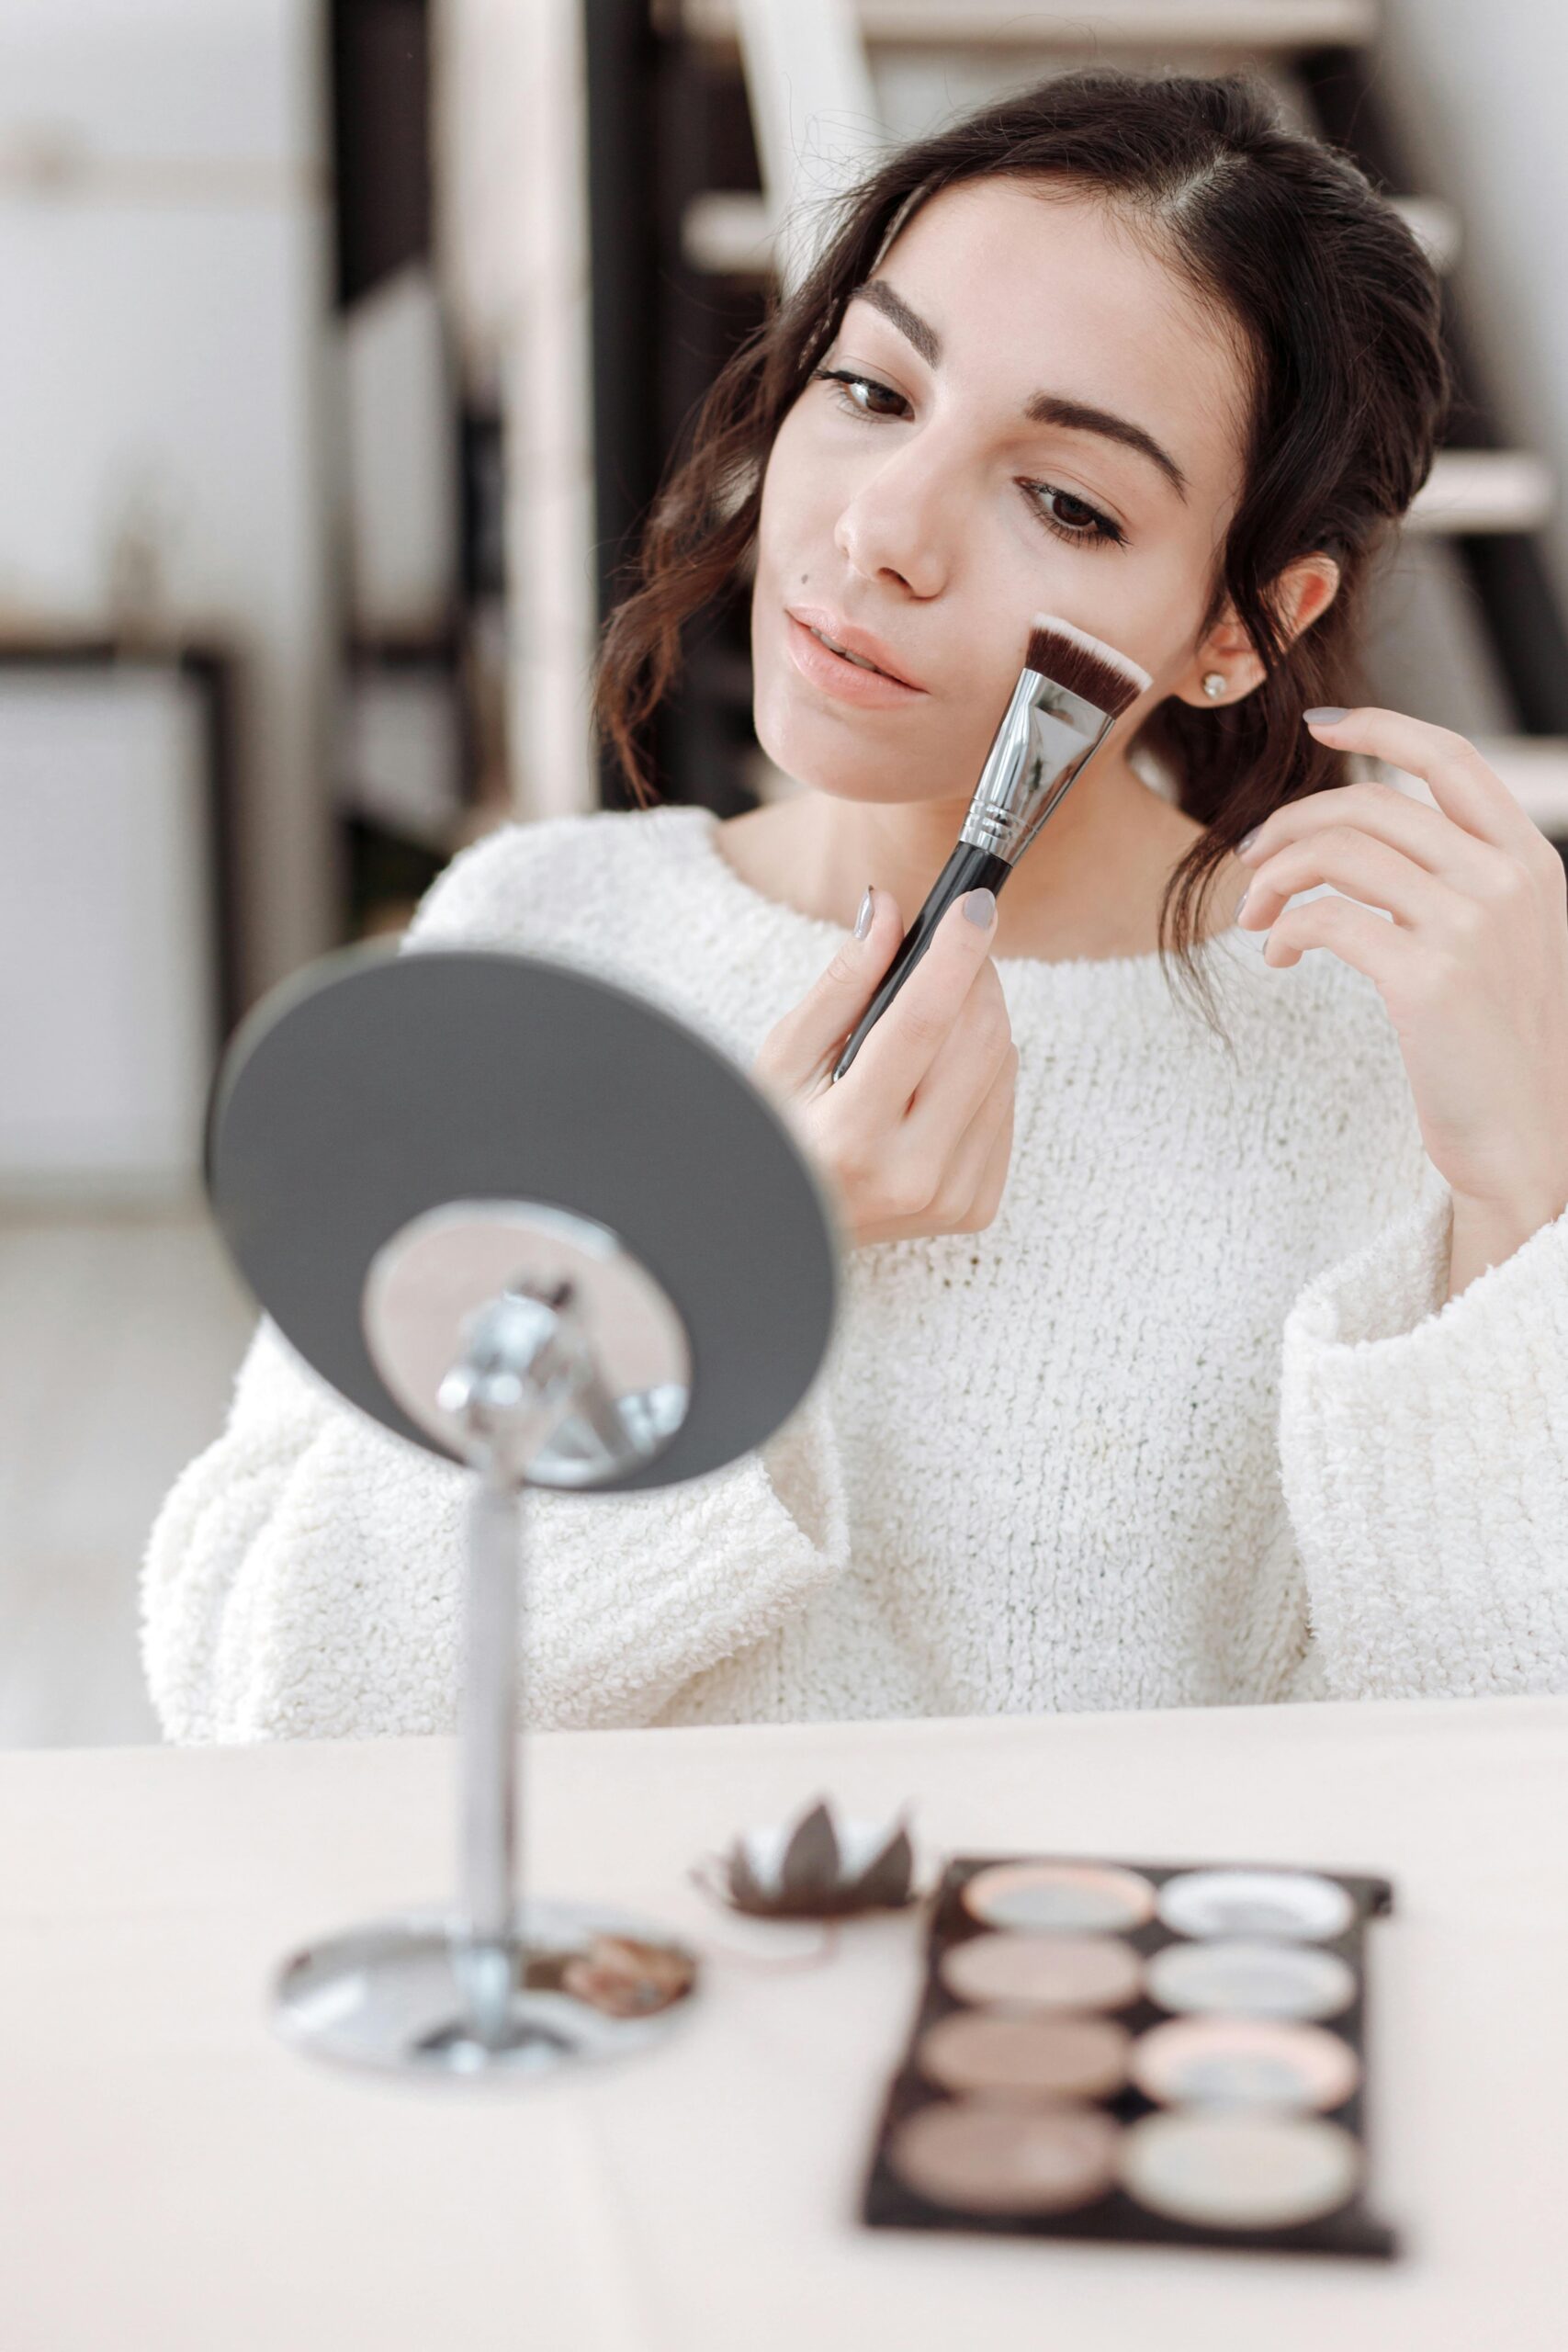 8 Makeup Tricks to Make Your Mornings Easier